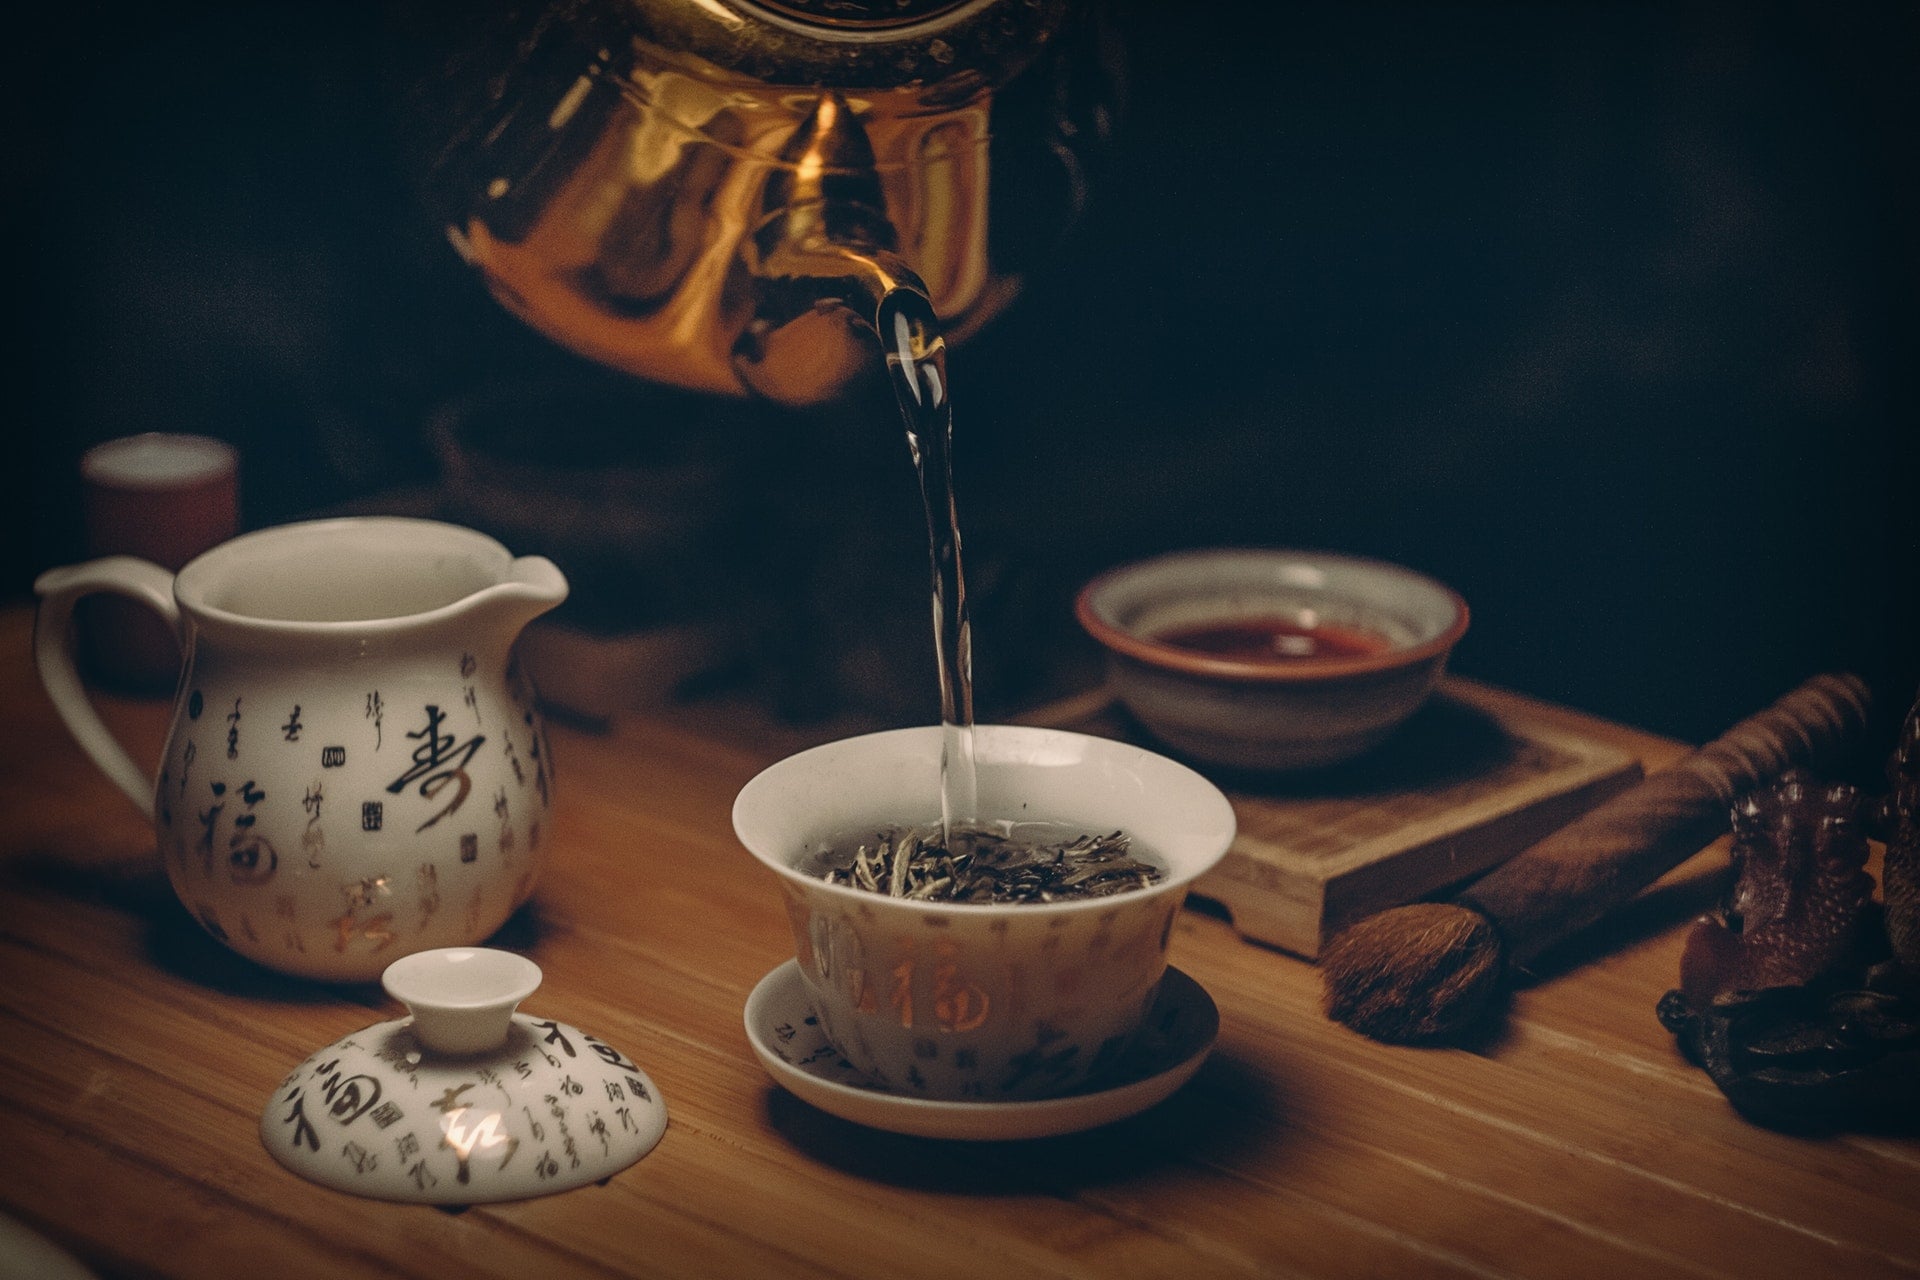 板橋林家花園 DIY 玩茶藝 9 月限額報名 gold kettle pouring hot water on cup of tea